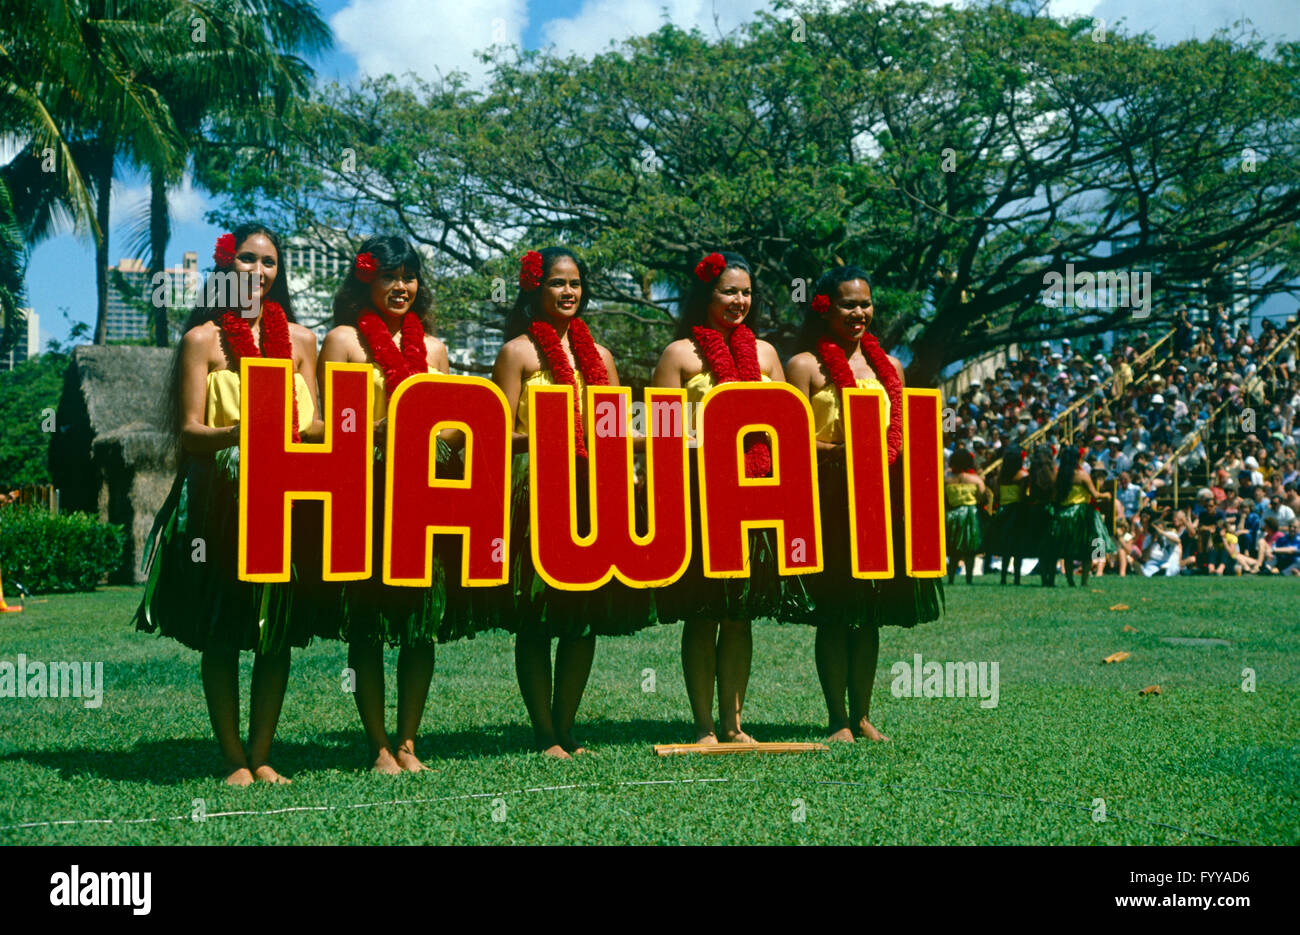 Five Hawaiian Hula girls holding up a 'Hawaii' sign, outside. Stock Photo